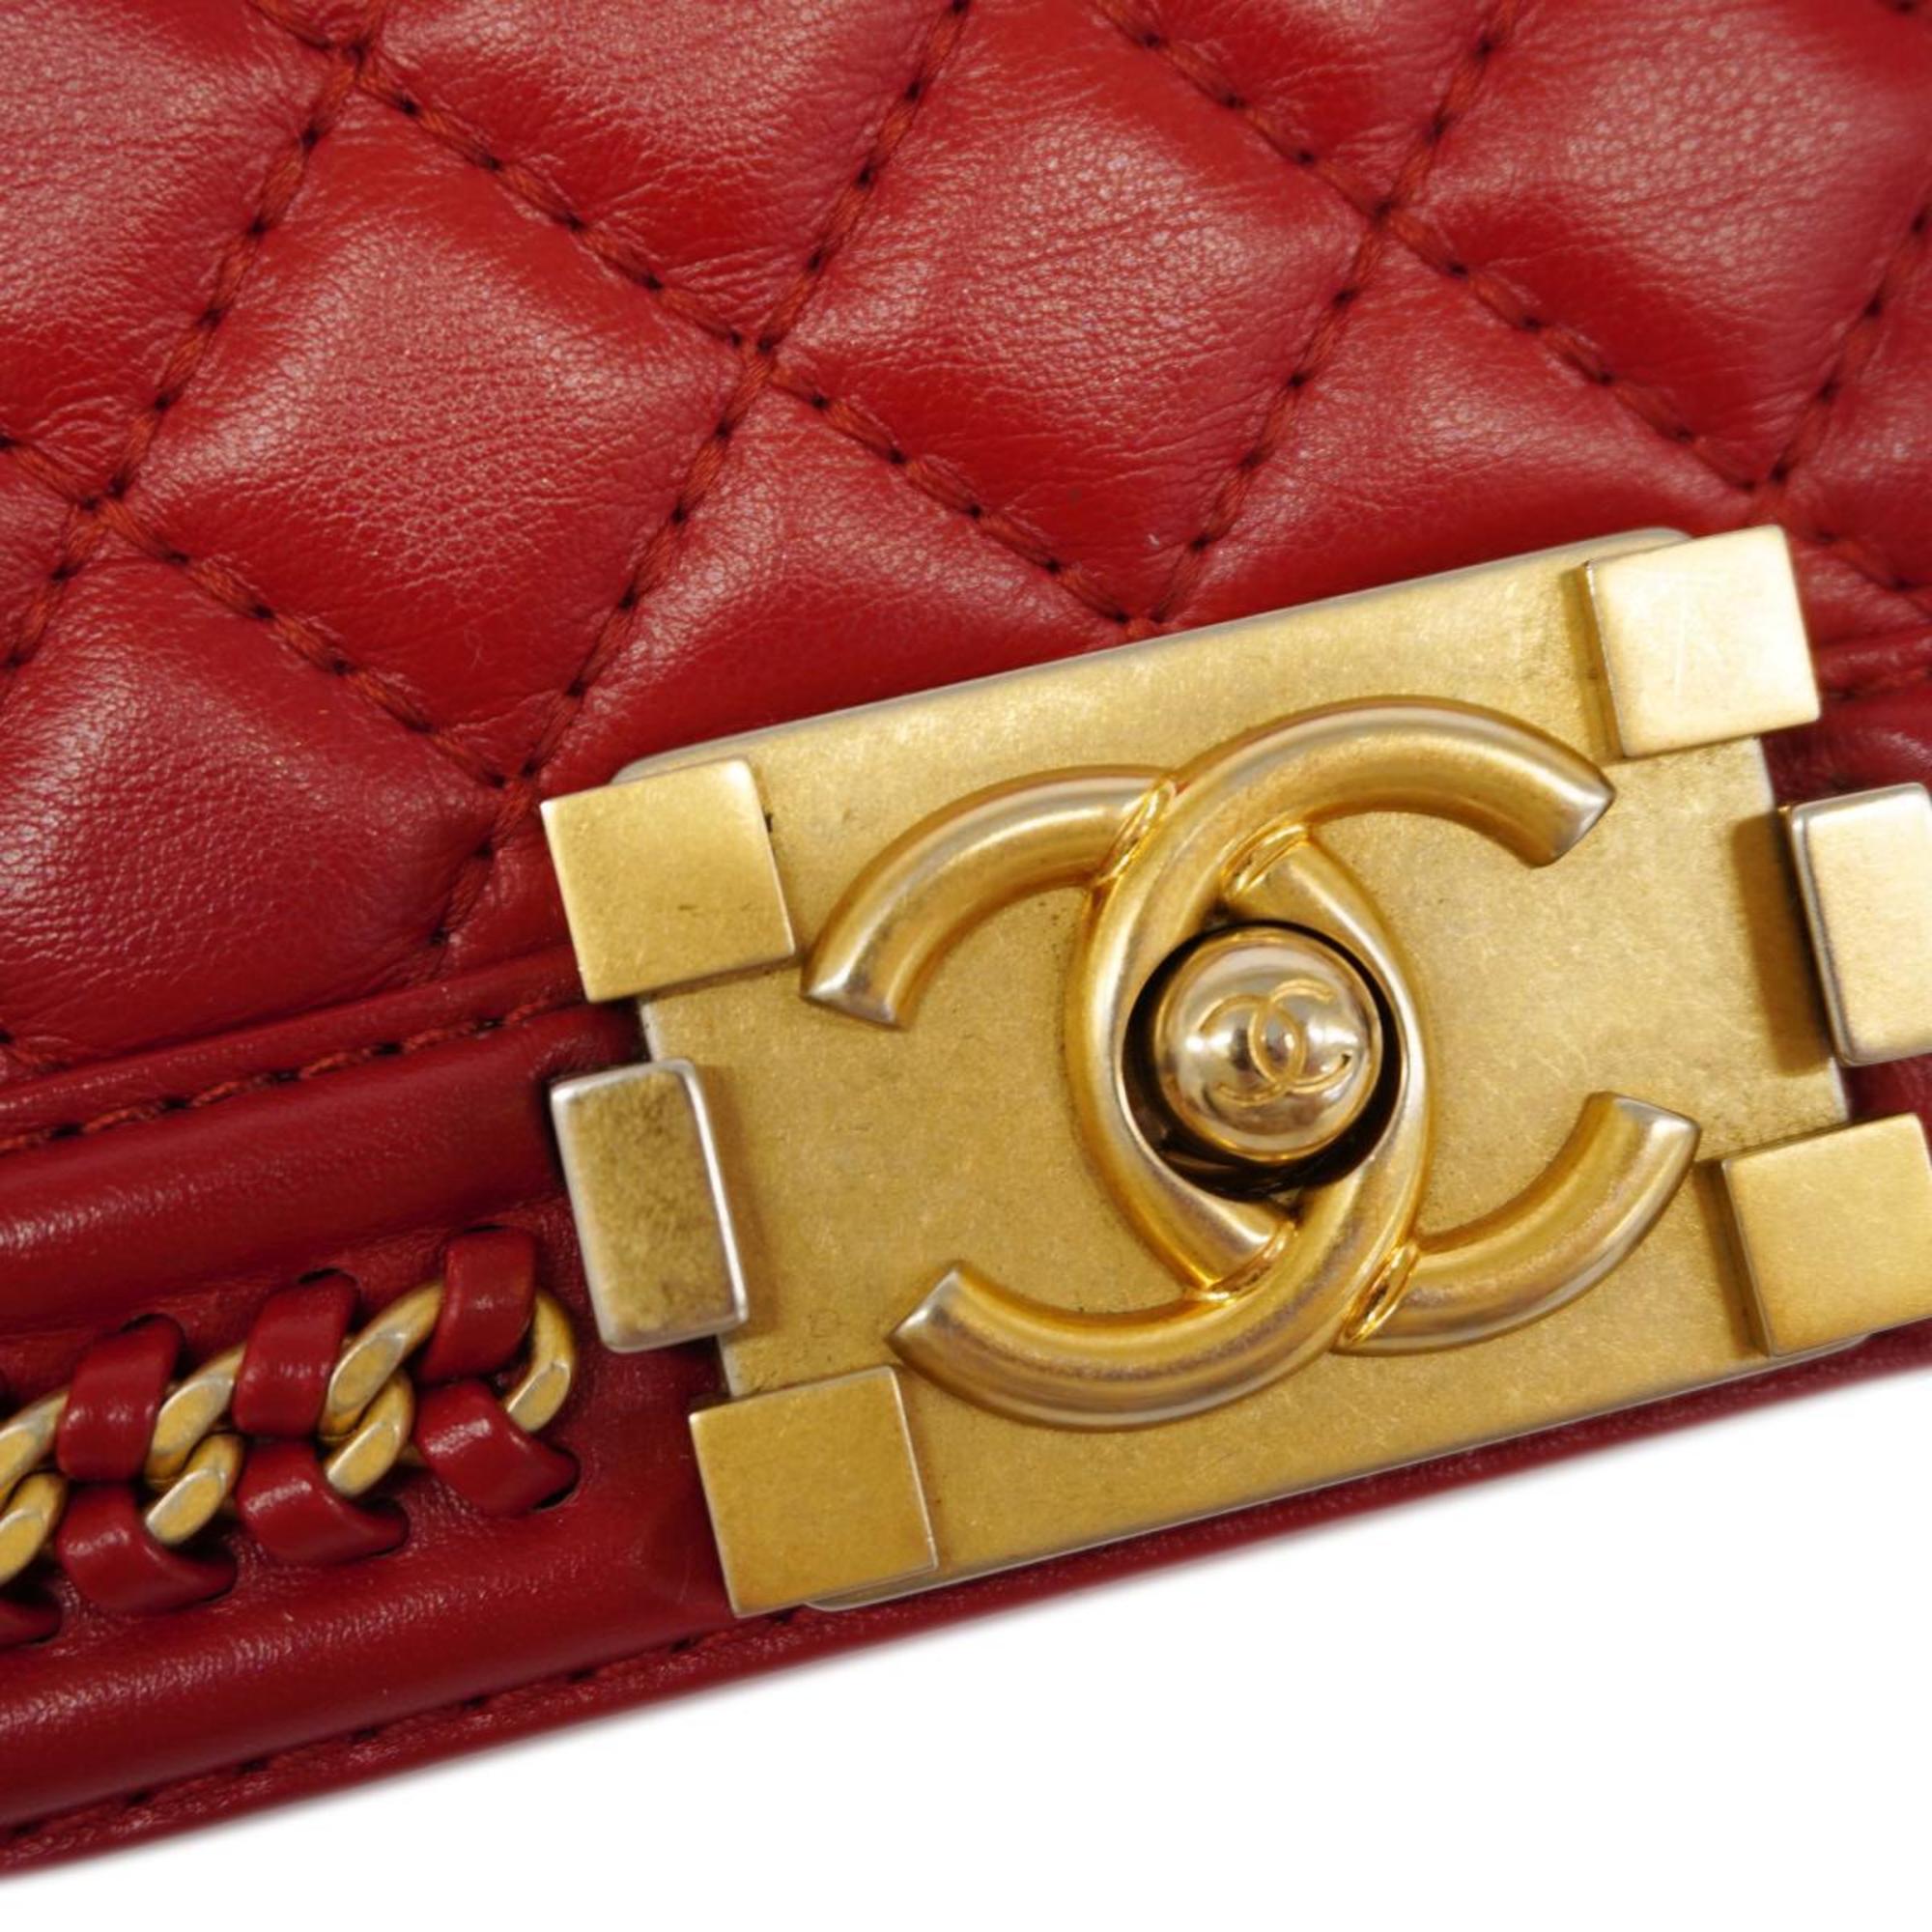 Chanel Handbag Boy Chain Shoulder Lambskin Red Women's